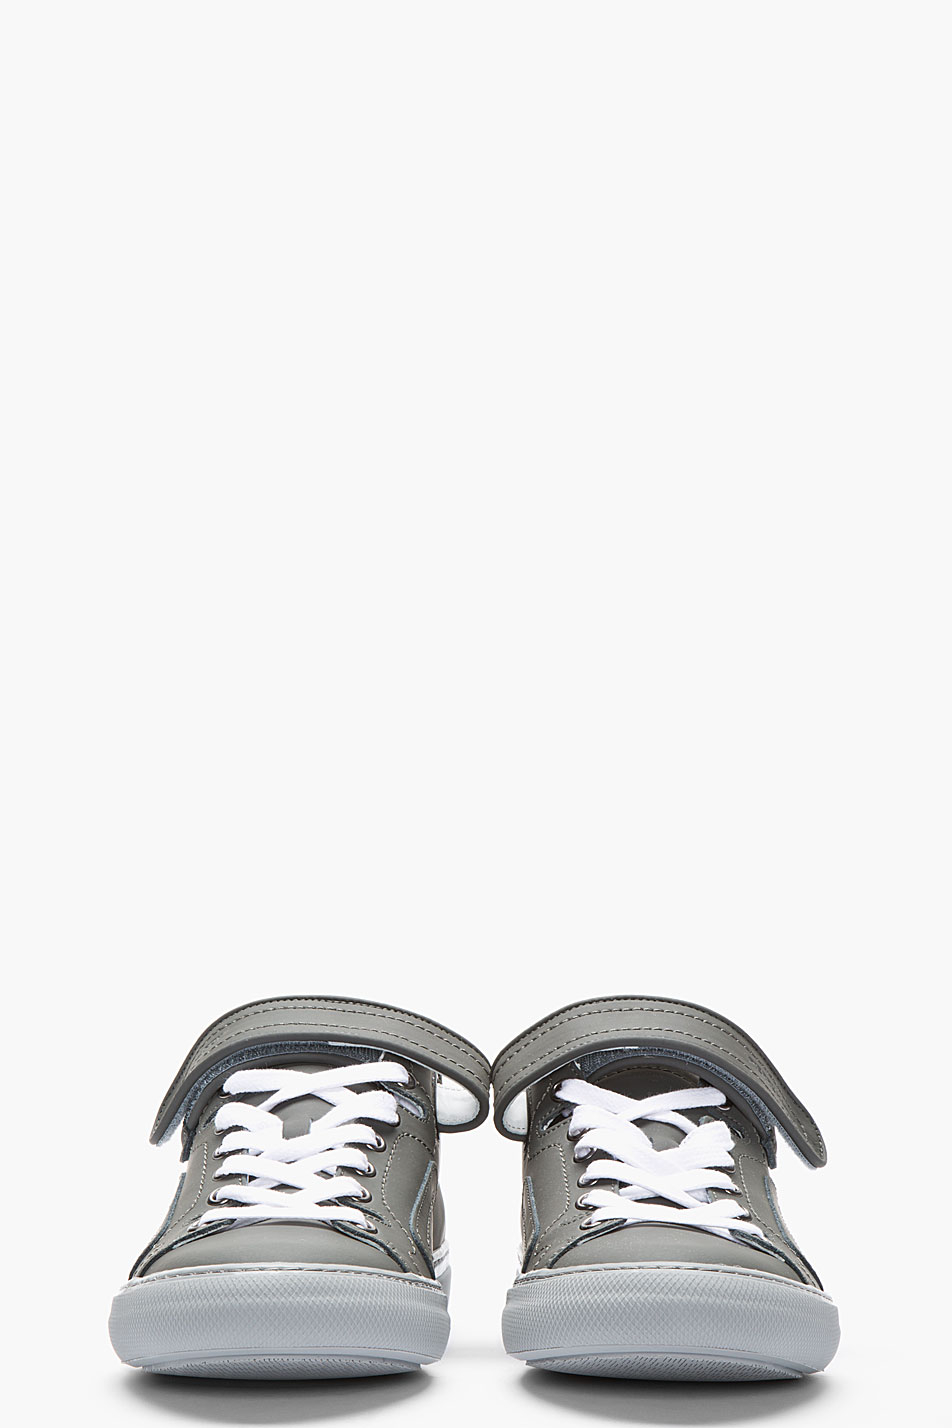 Pierre hardy Matte Grey Rubberized Leather Velcro Sneakers in Gray for ...